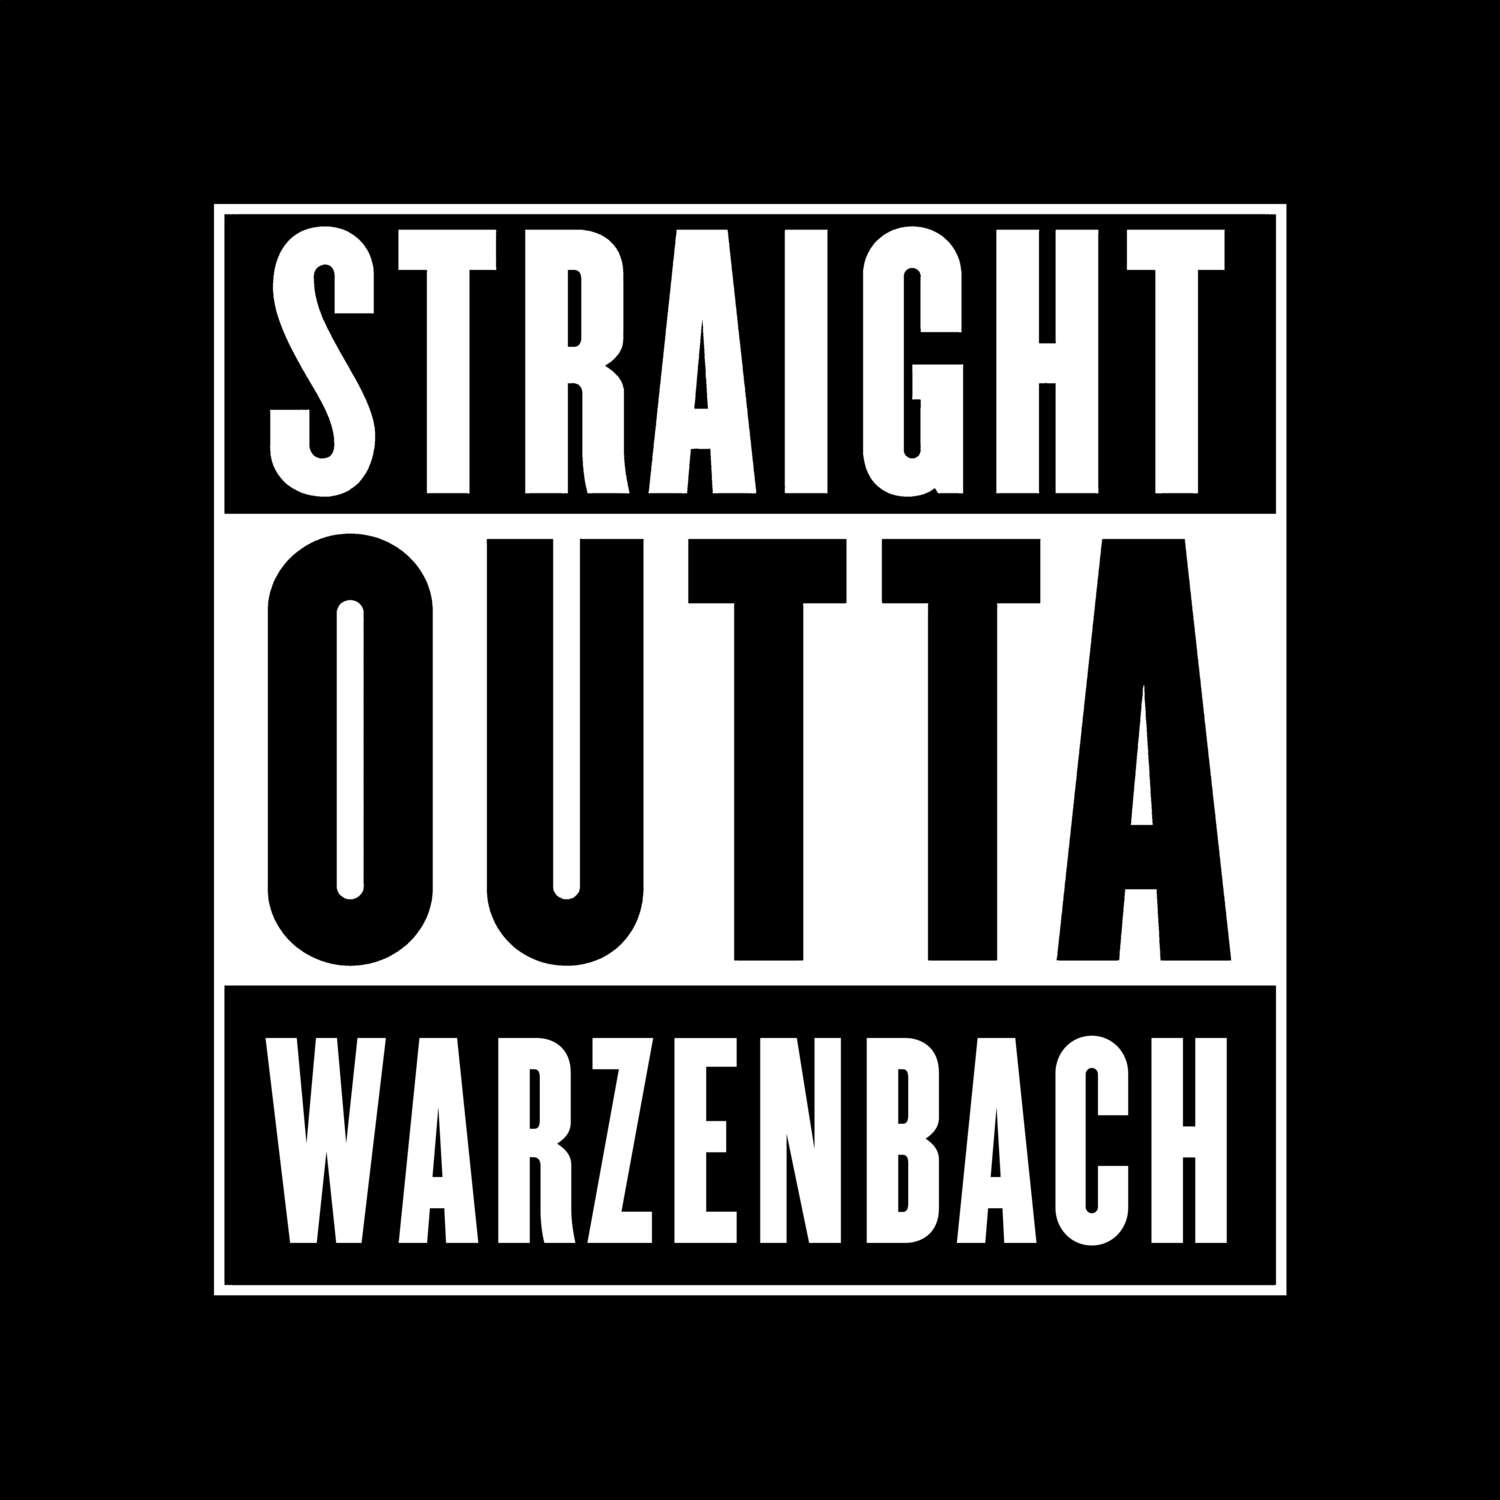 Warzenbach T-Shirt »Straight Outta«